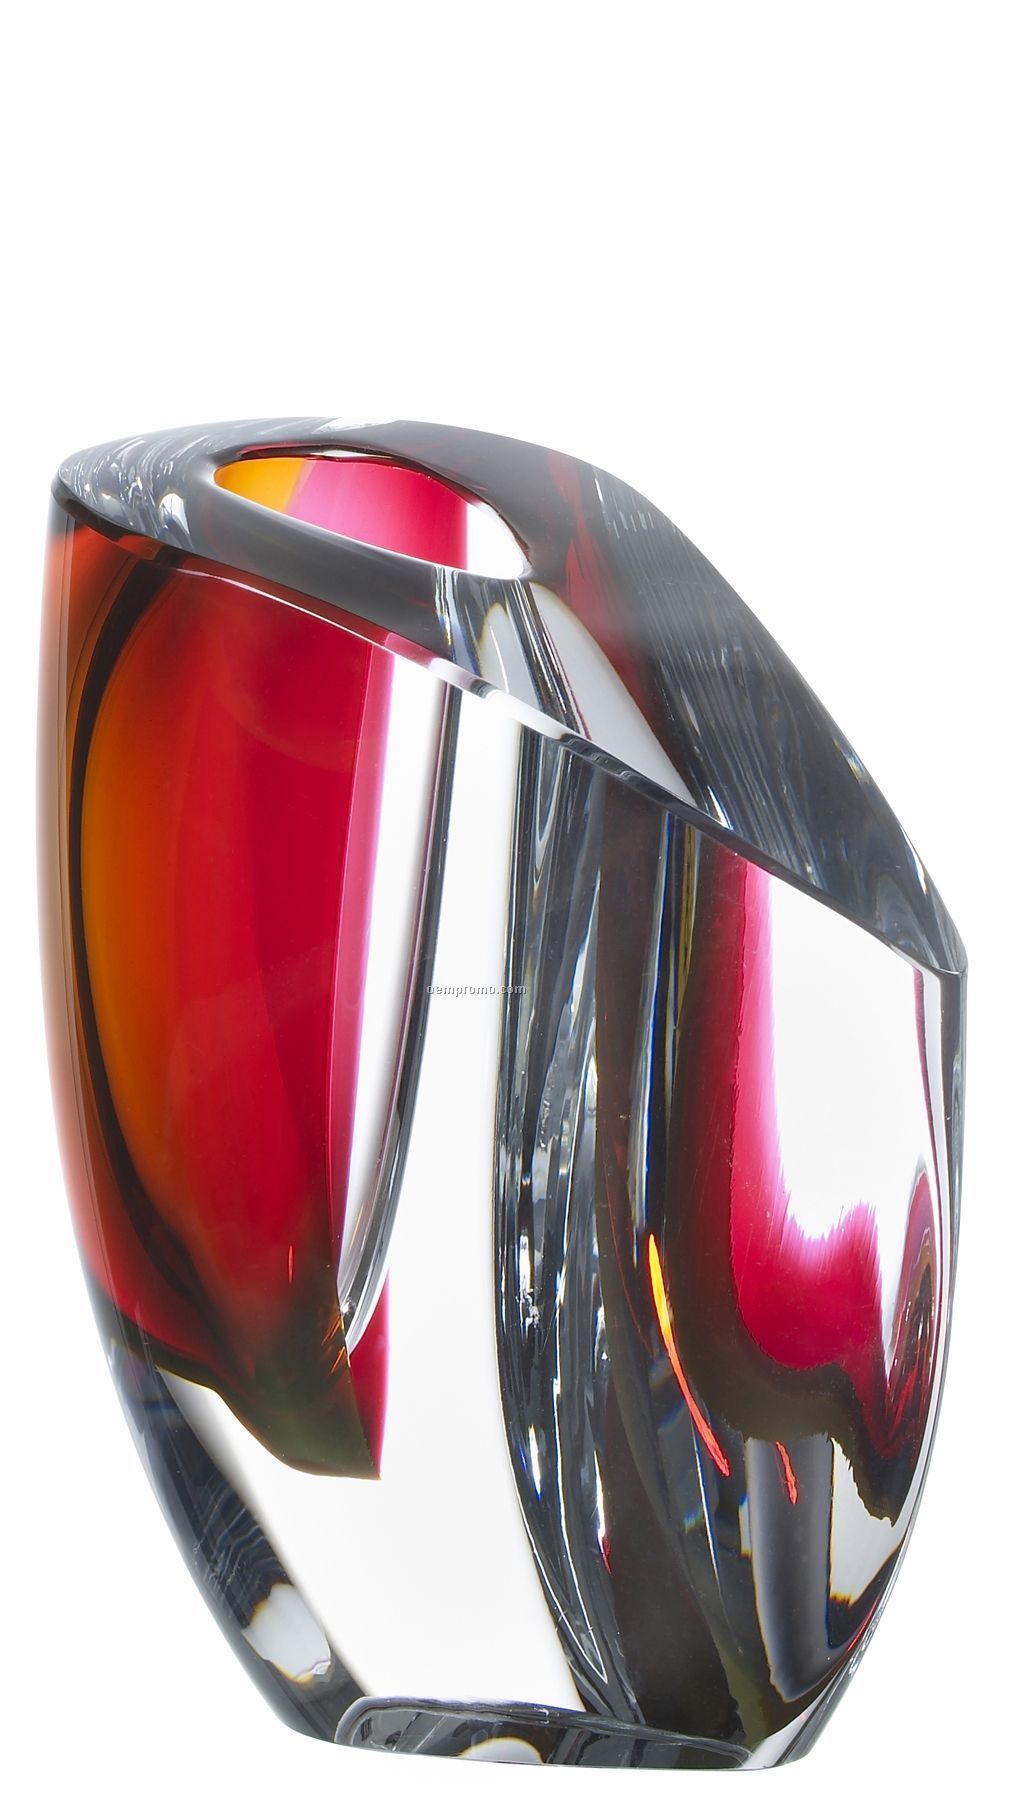 Mirage Small Glass Vase By Goran Warff (Grey & Red)